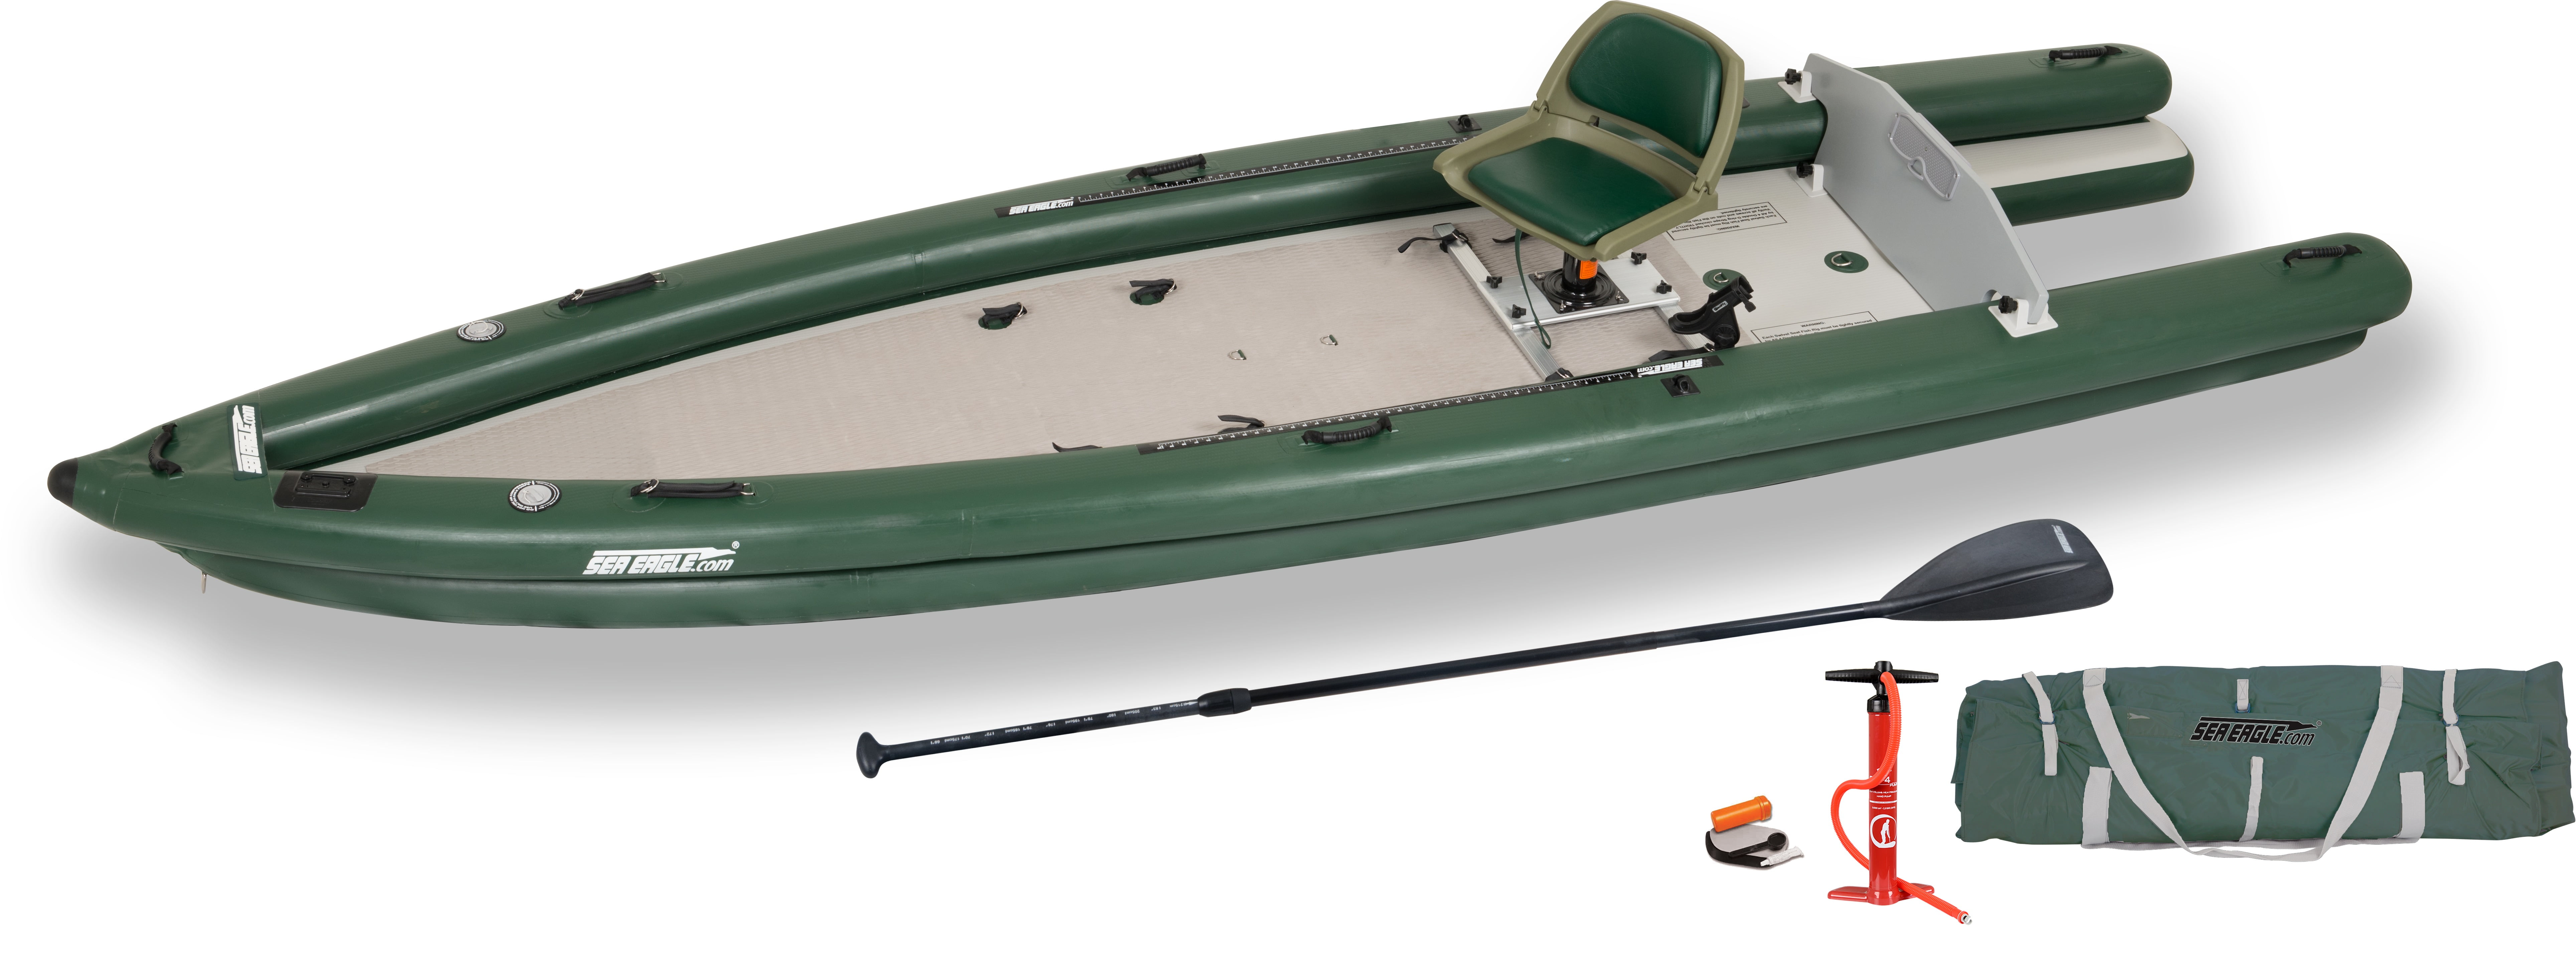 Kinetic Fishing Boat Gaff Heavy Duty - Fishing Tools - AliExpress